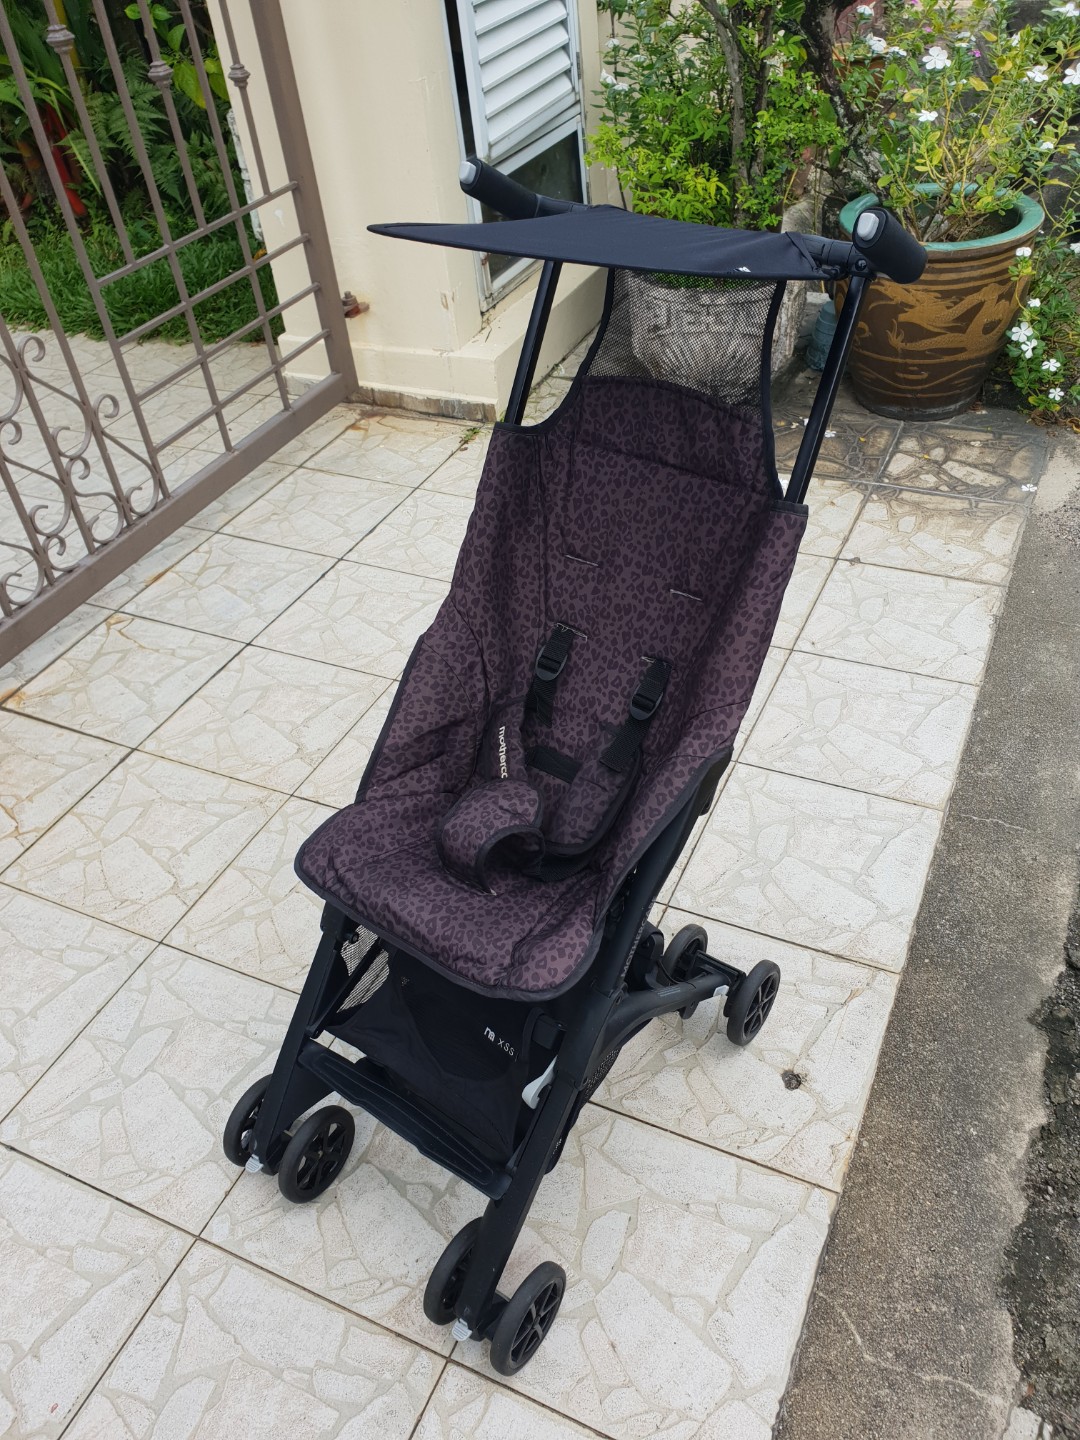 the xss stroller